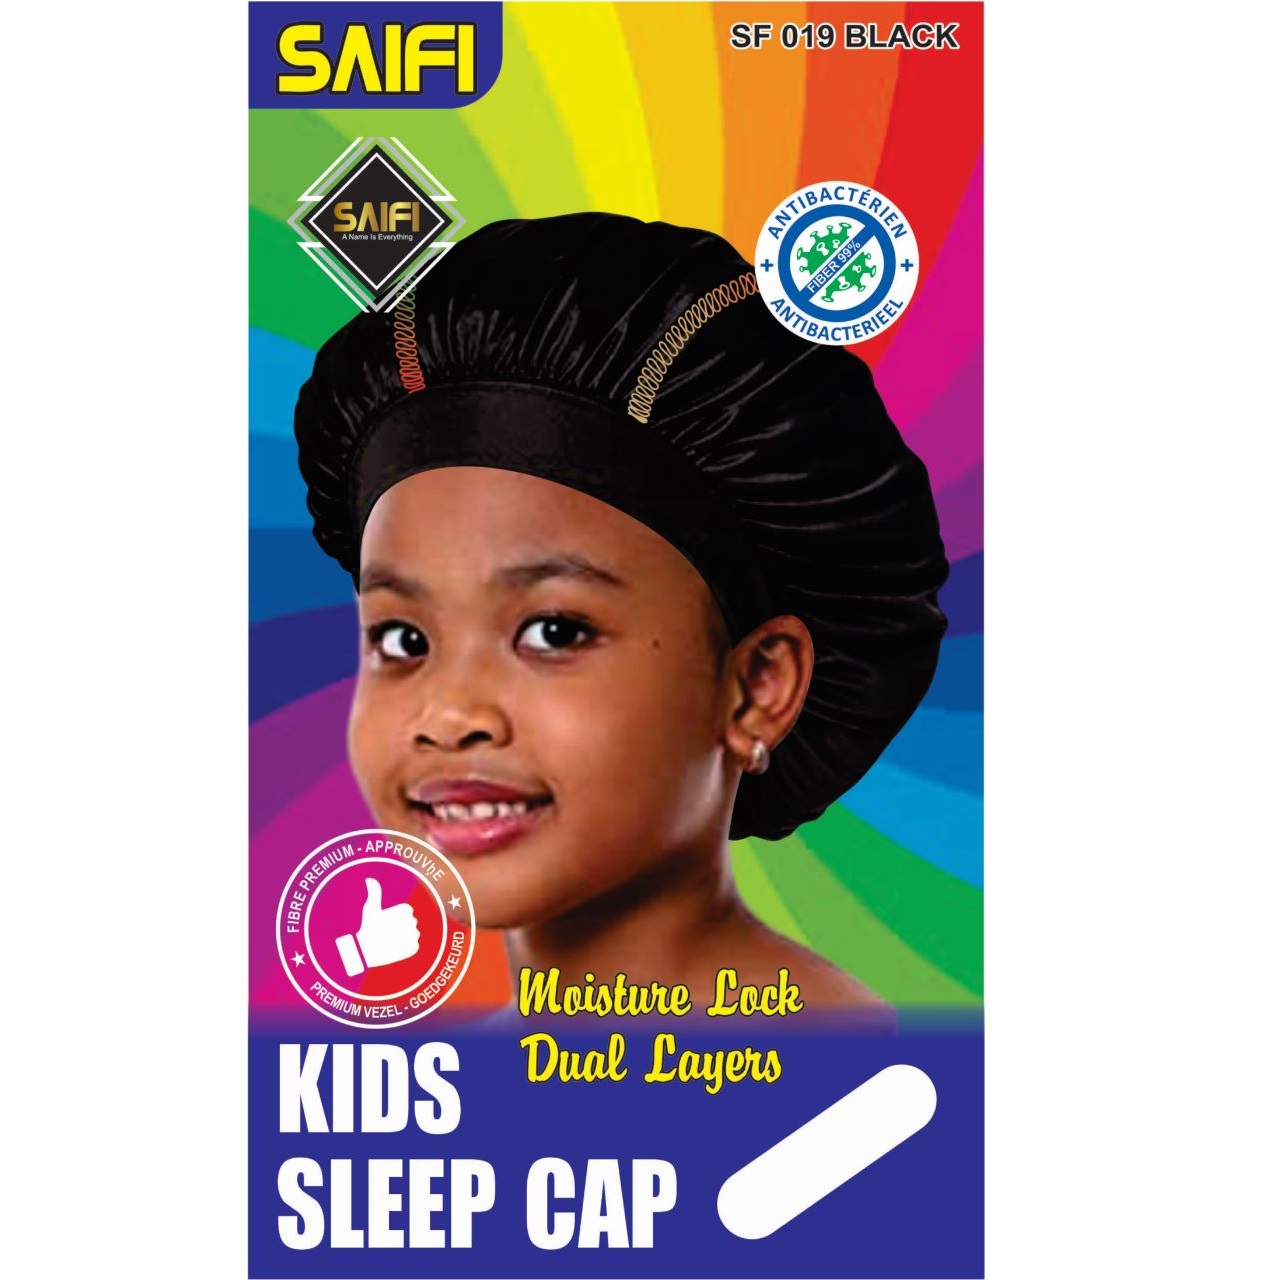 Saifi kids bonnet pour dormir Black SF 019